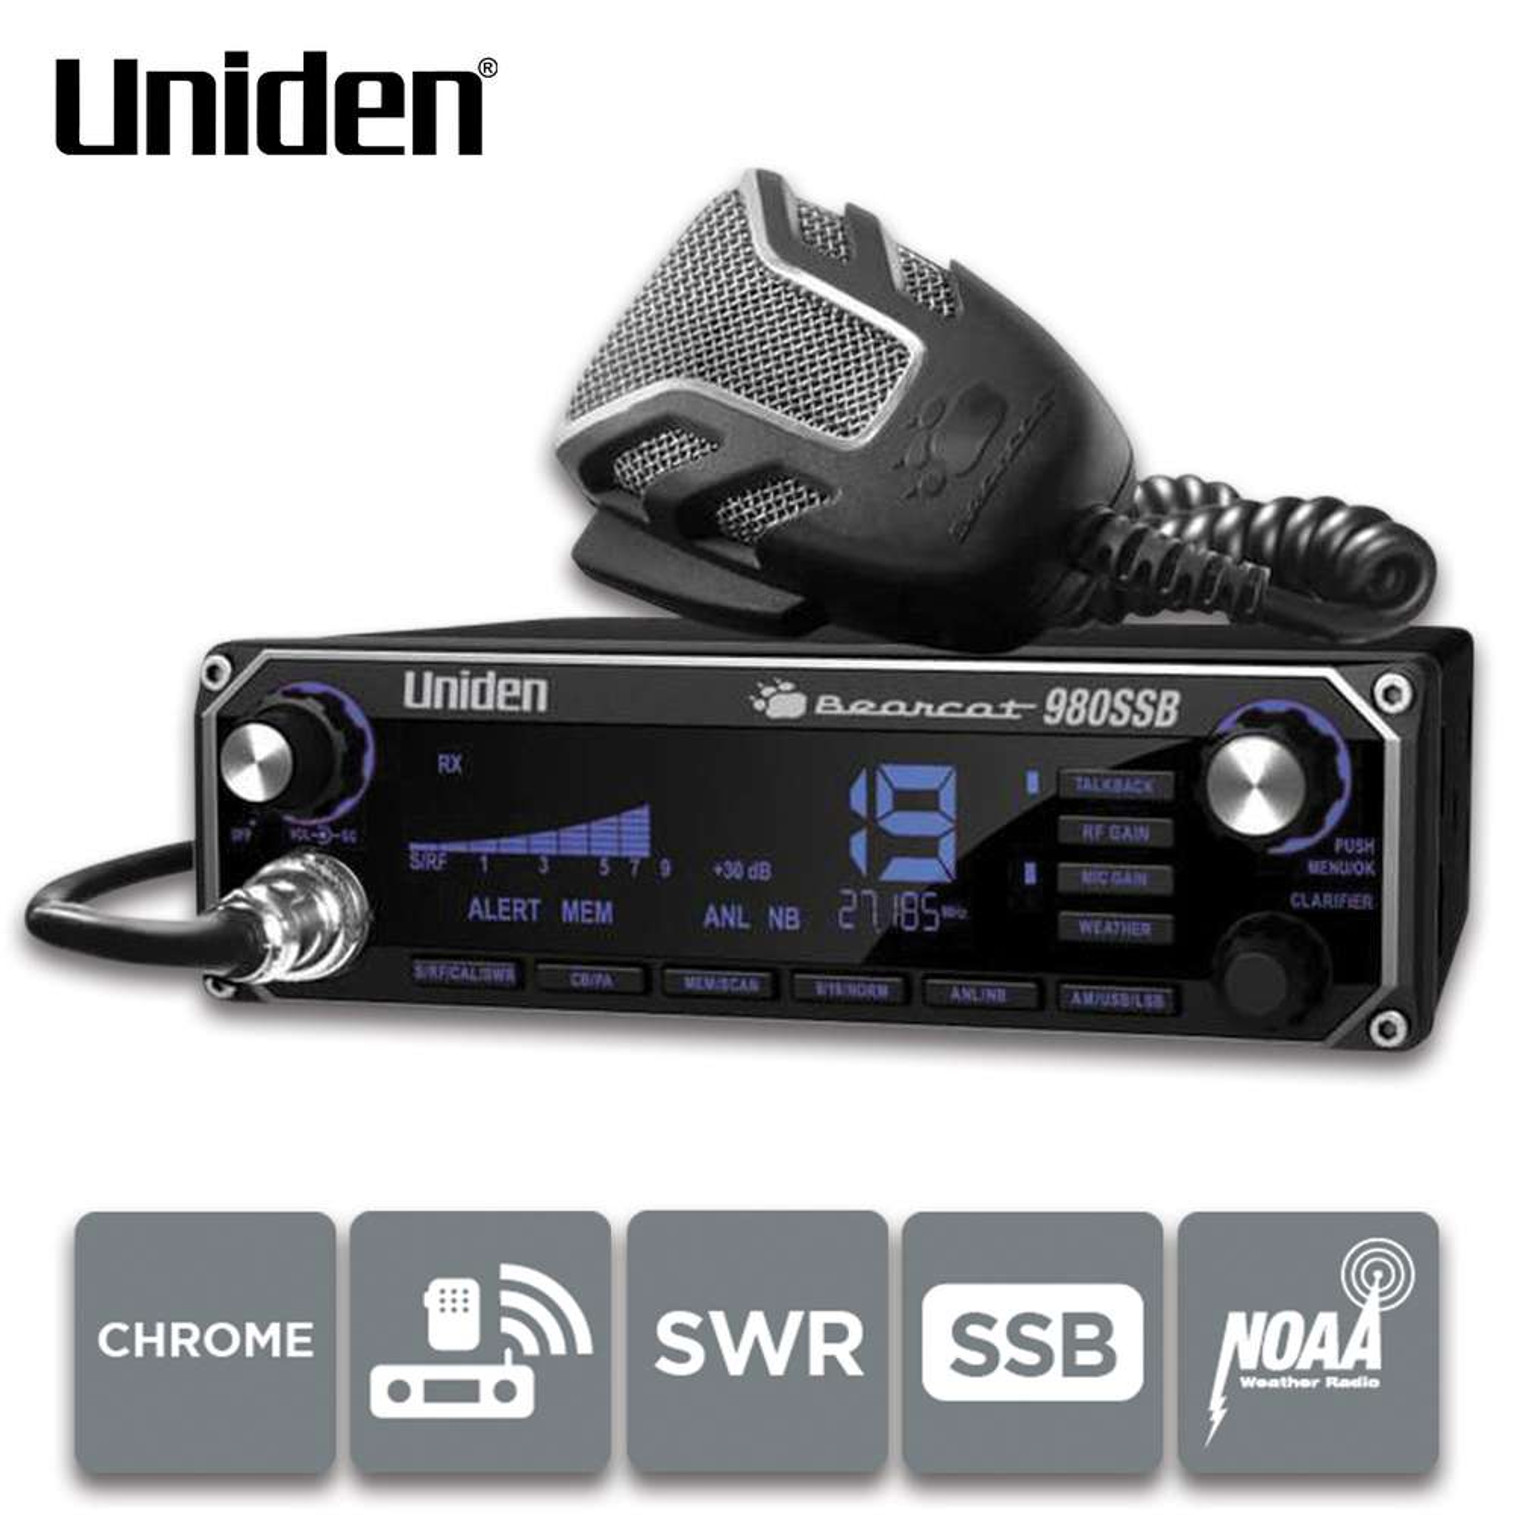 Uniden Bearcat 980SSB CB Radio - 40 Channels, 7-Color Display